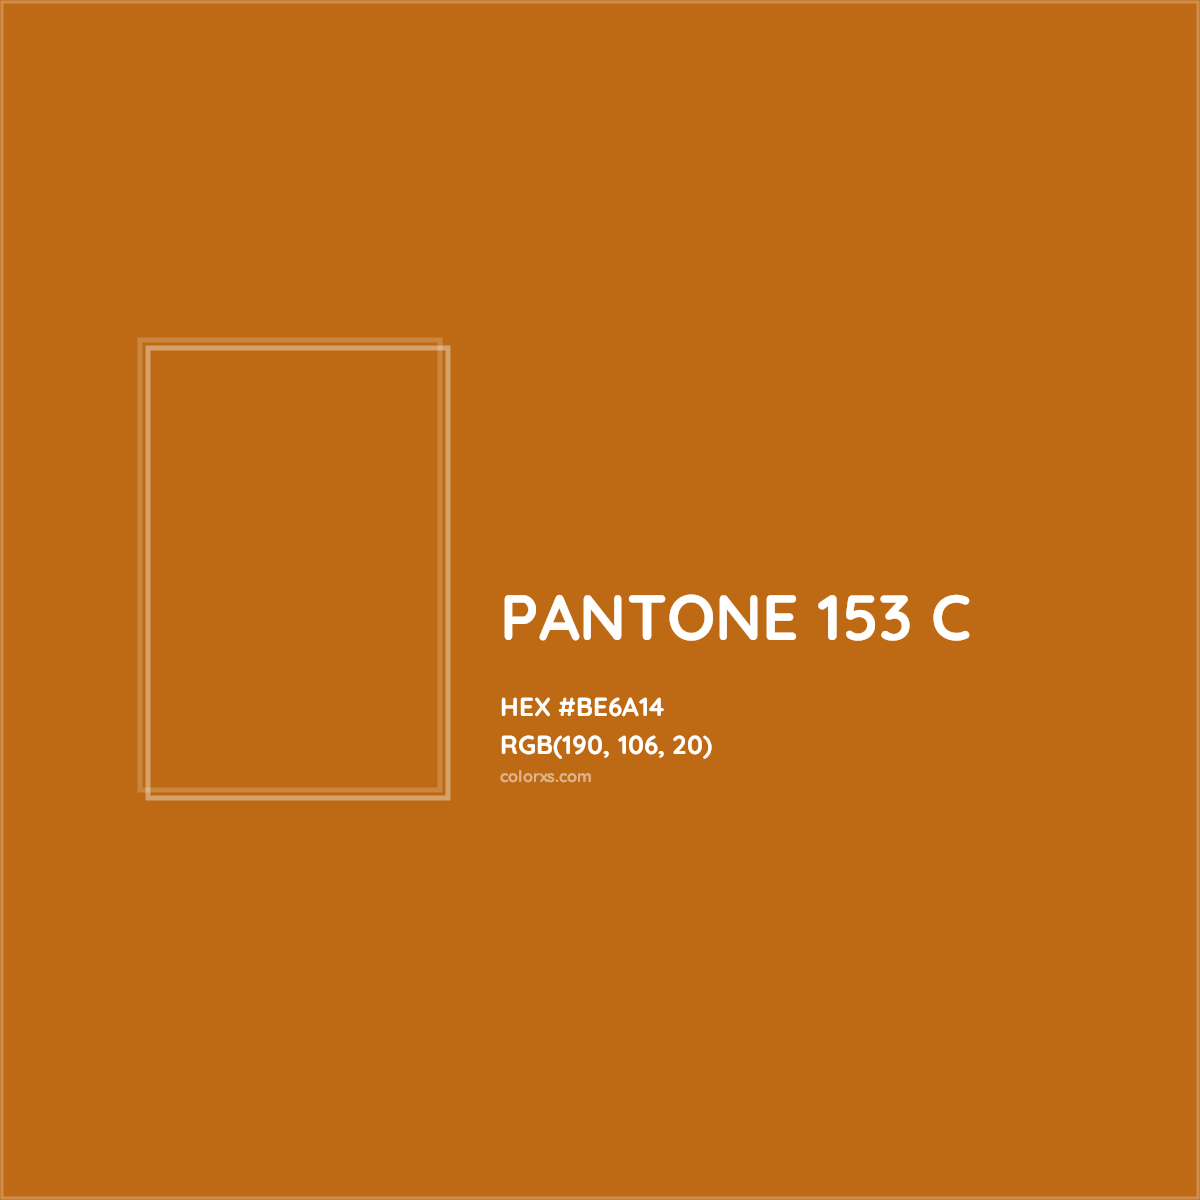 HEX #BE6A14 PANTONE 153 C CMS Pantone PMS - Color Code